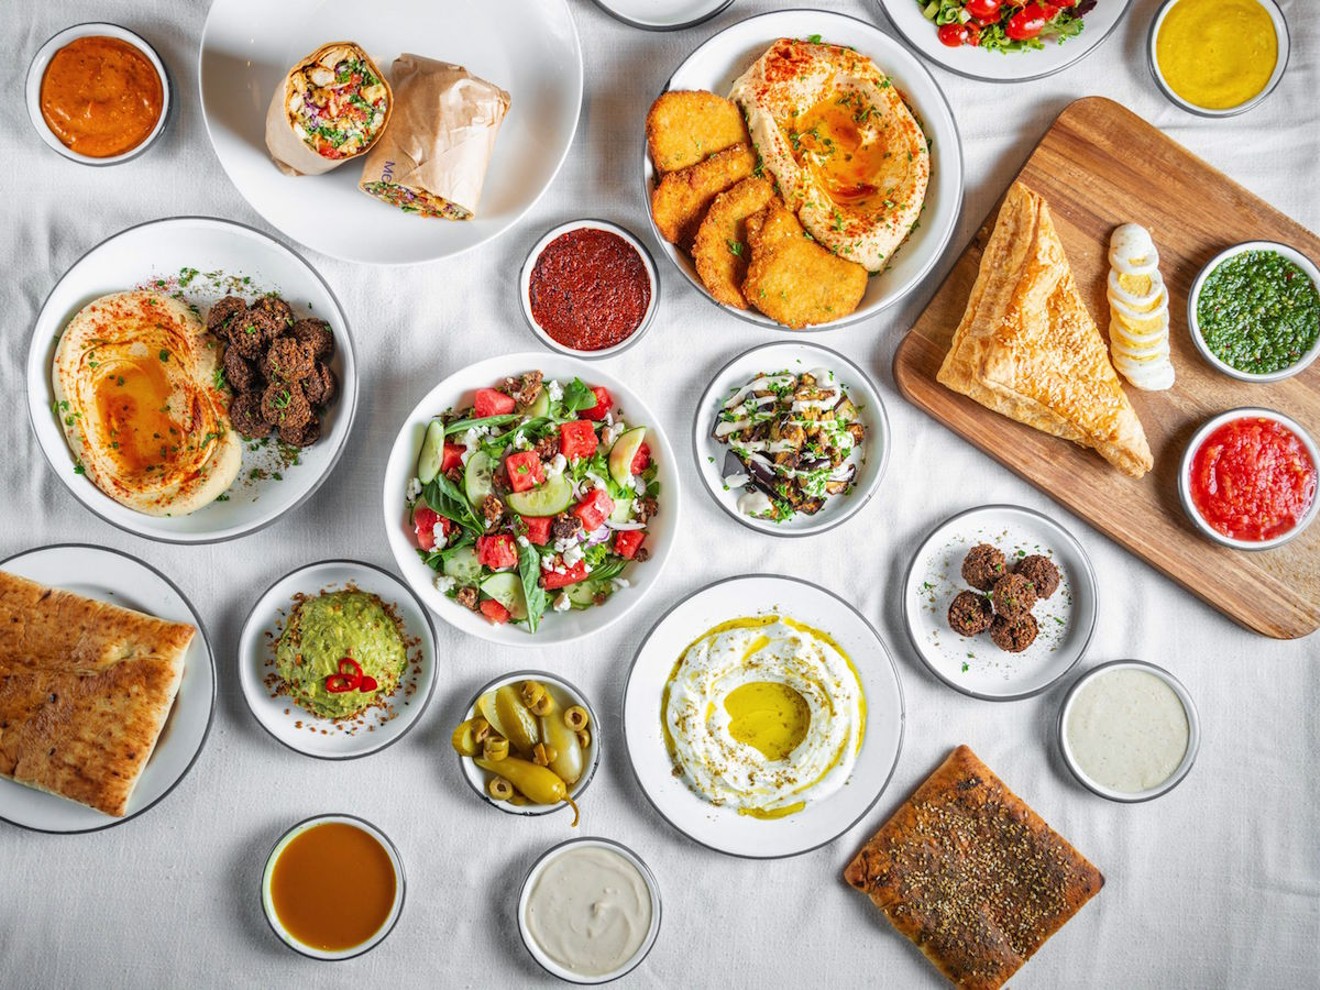 A spread of dishes you'll find on Motek's menu, including falafel, schnitzel, and salads.